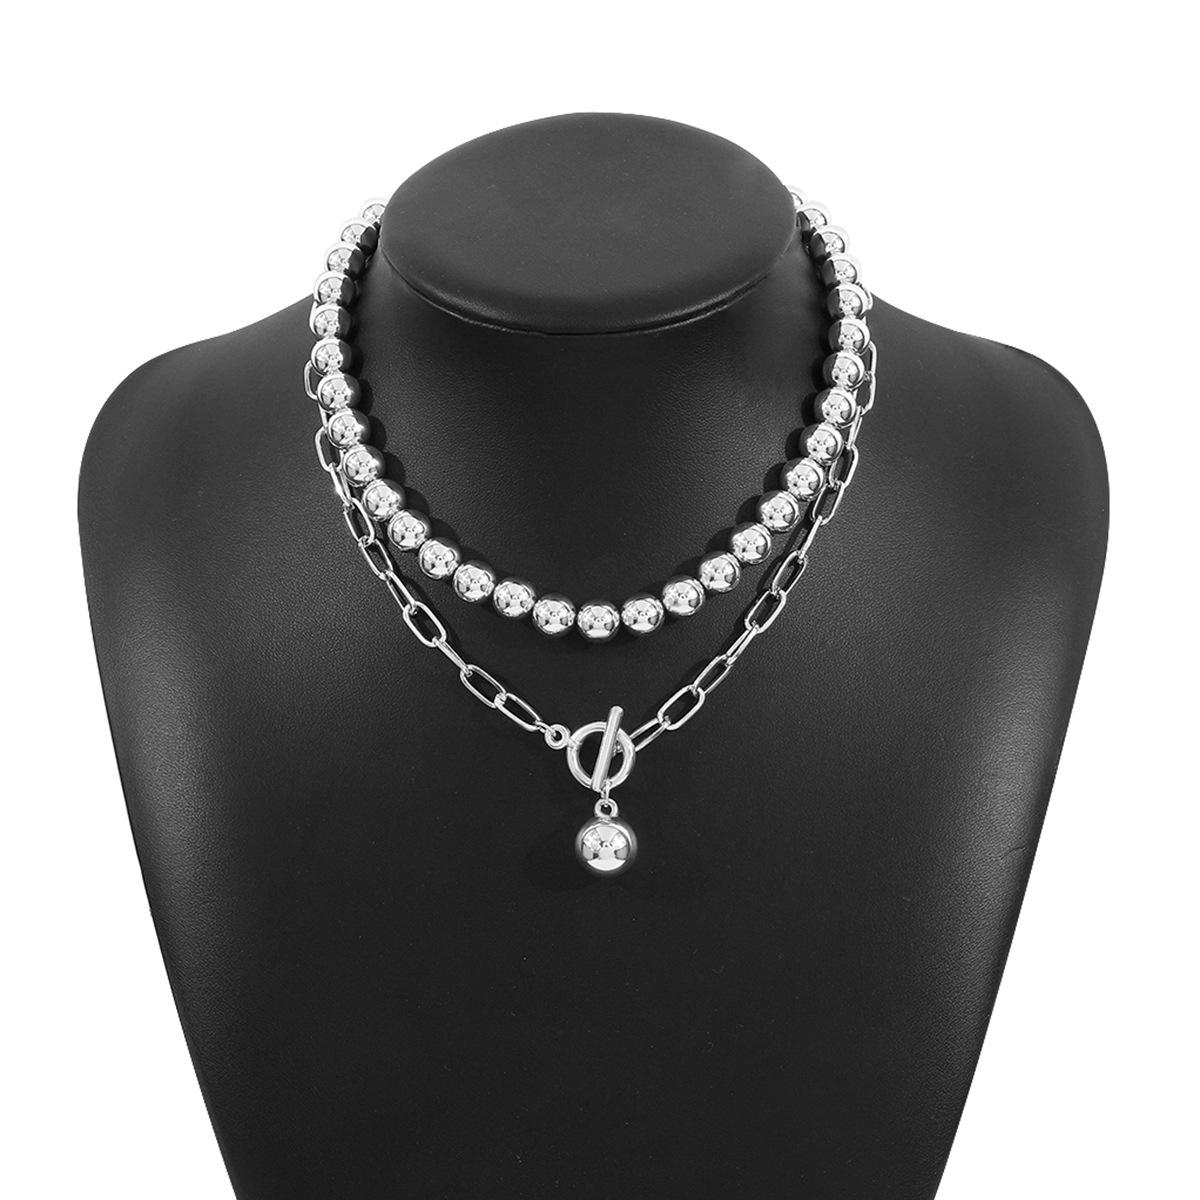 2:White K necklace